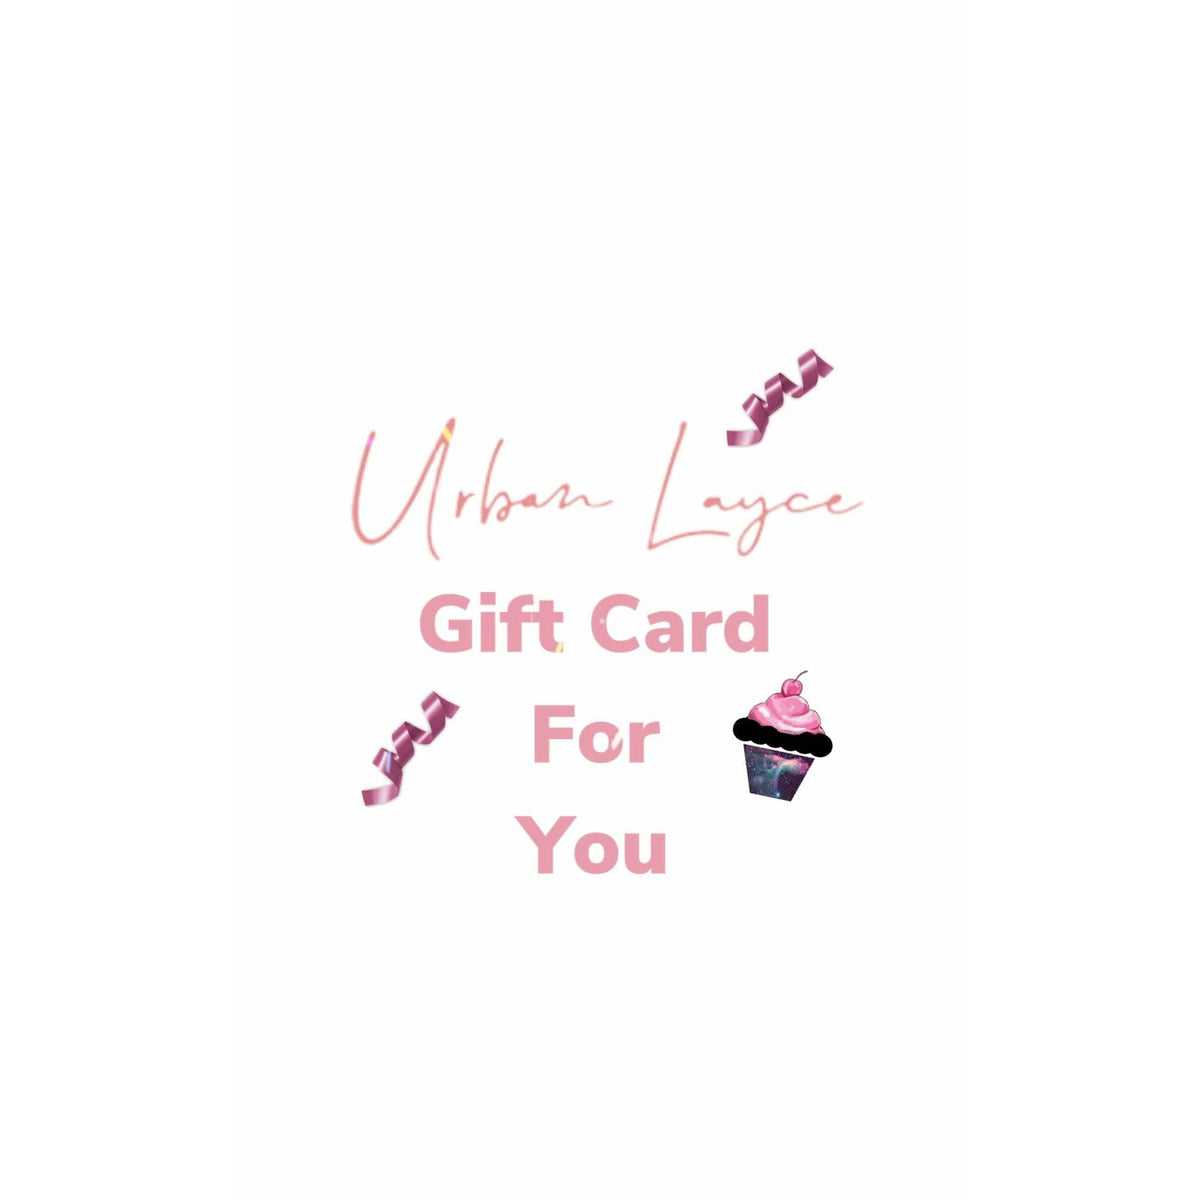 Urban Layce Gift Card